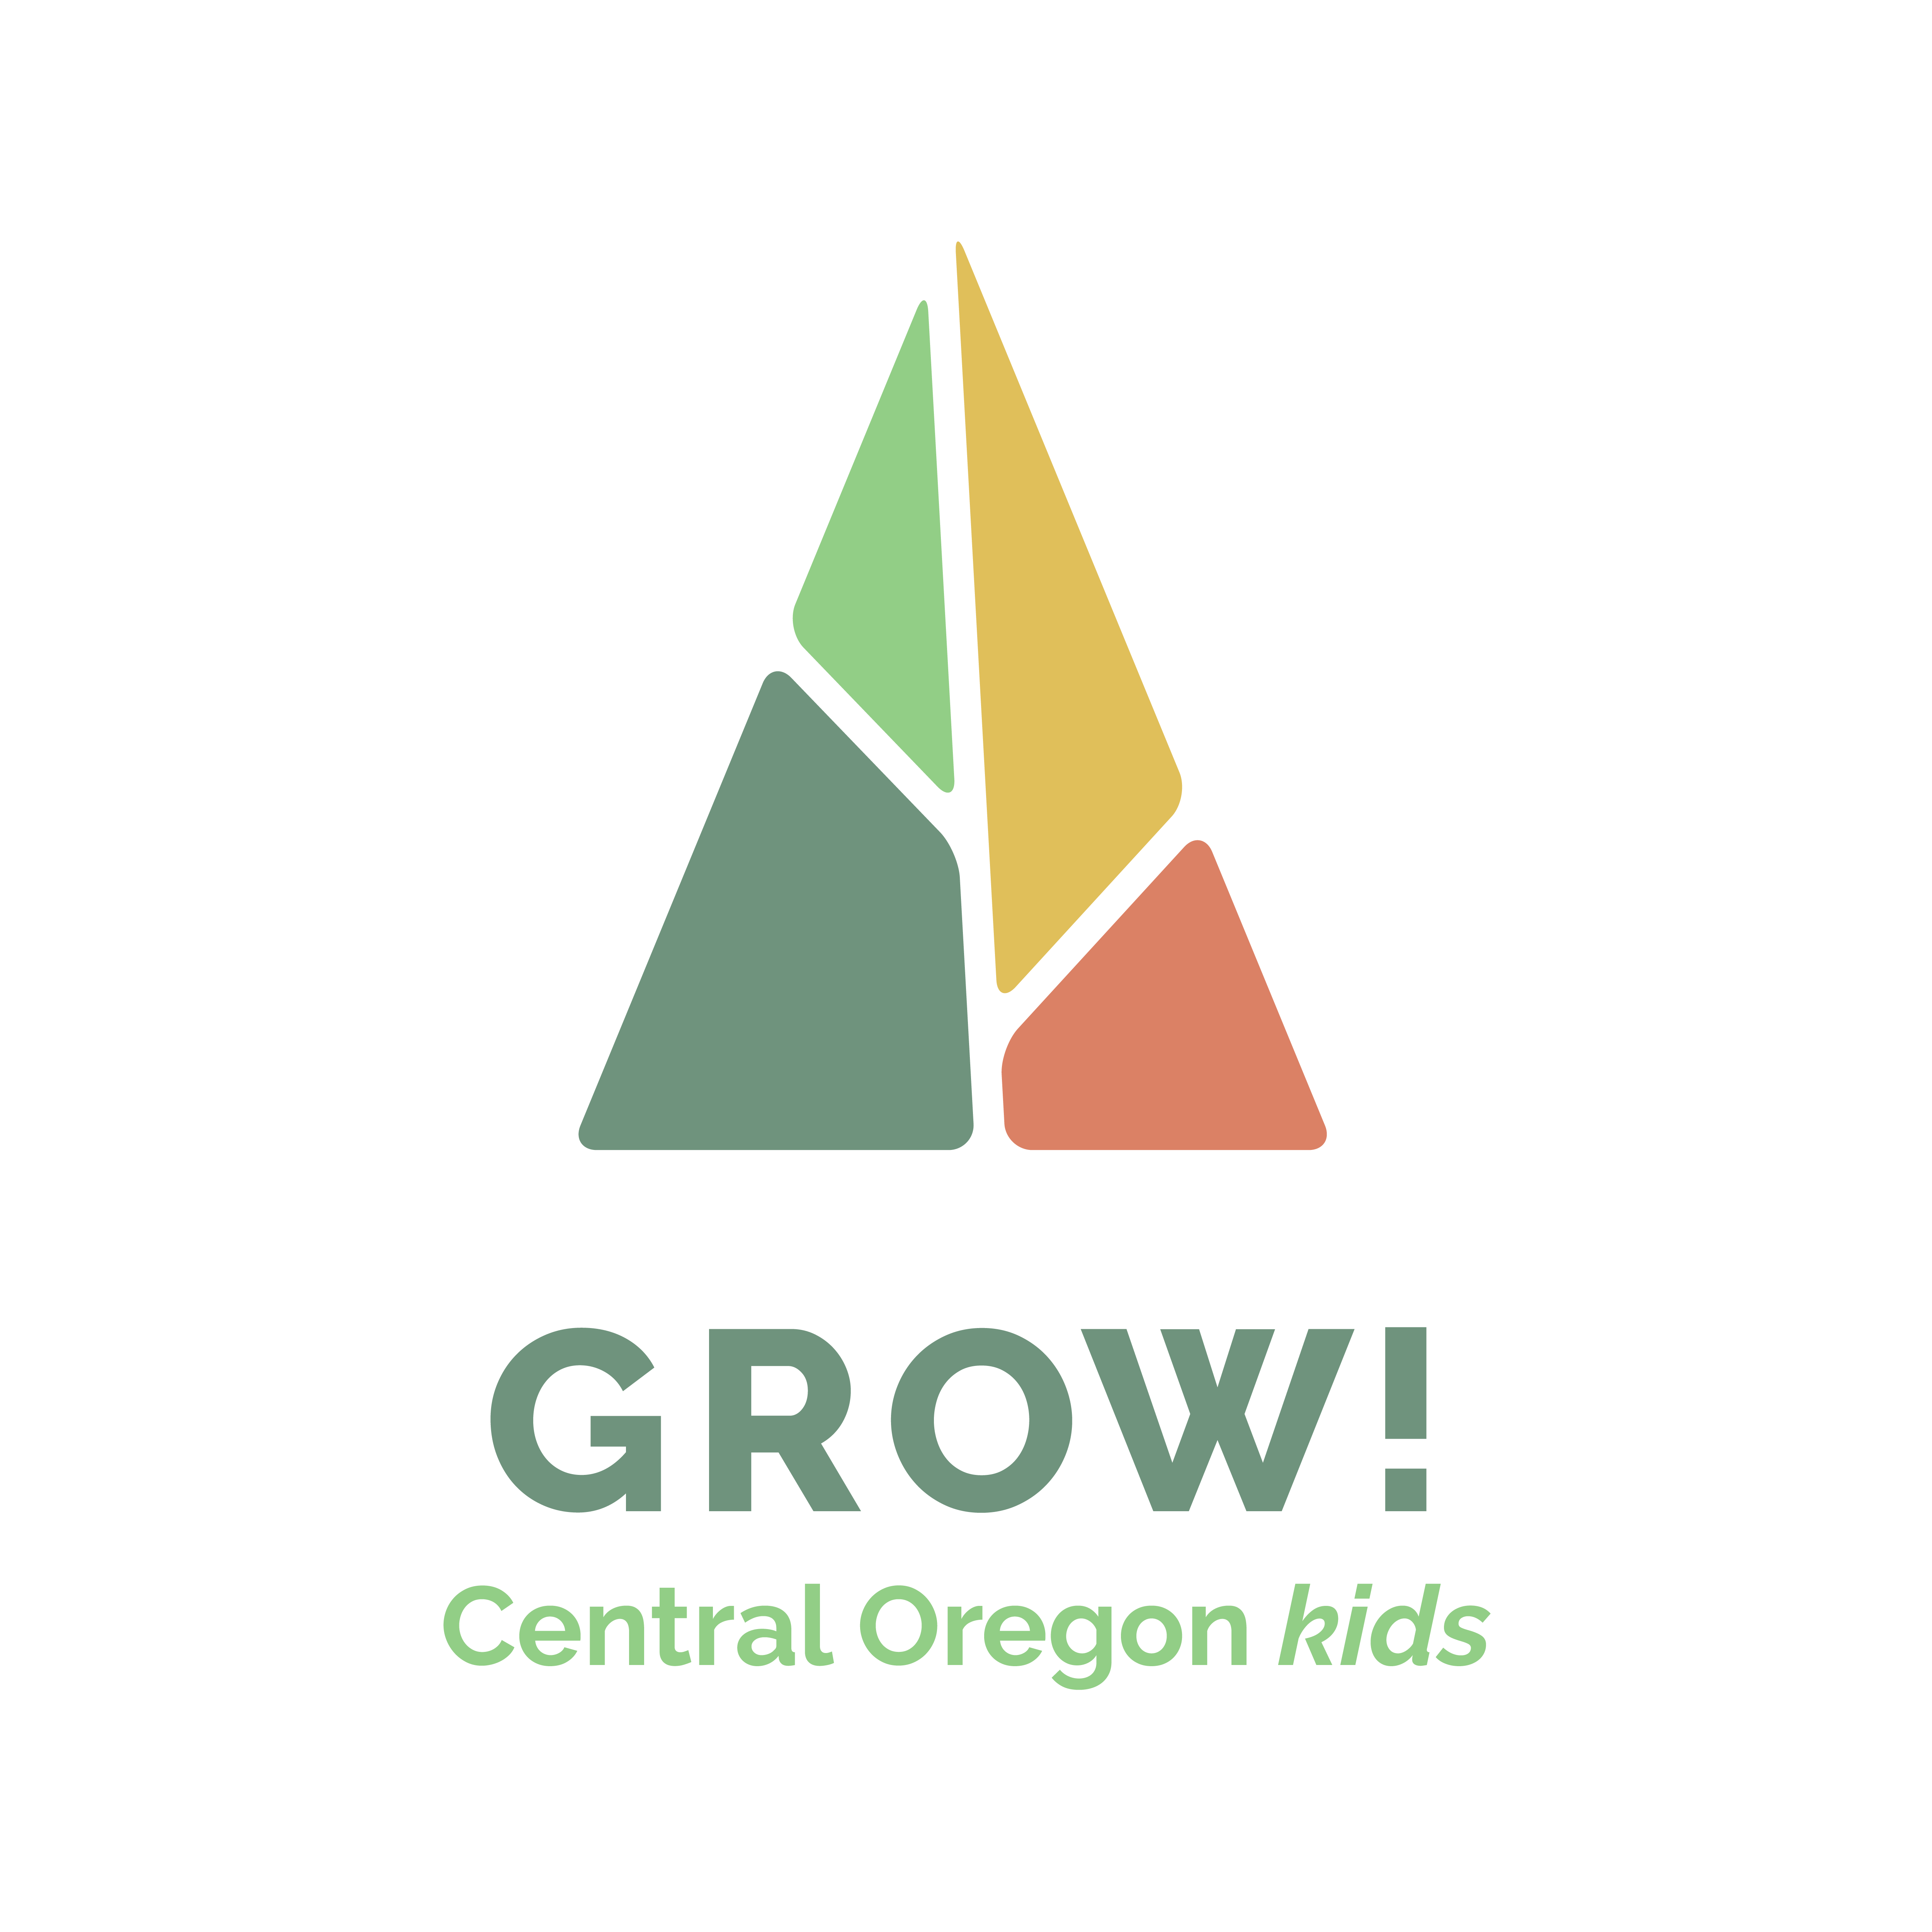 GROW! Central Oregon Kids logo